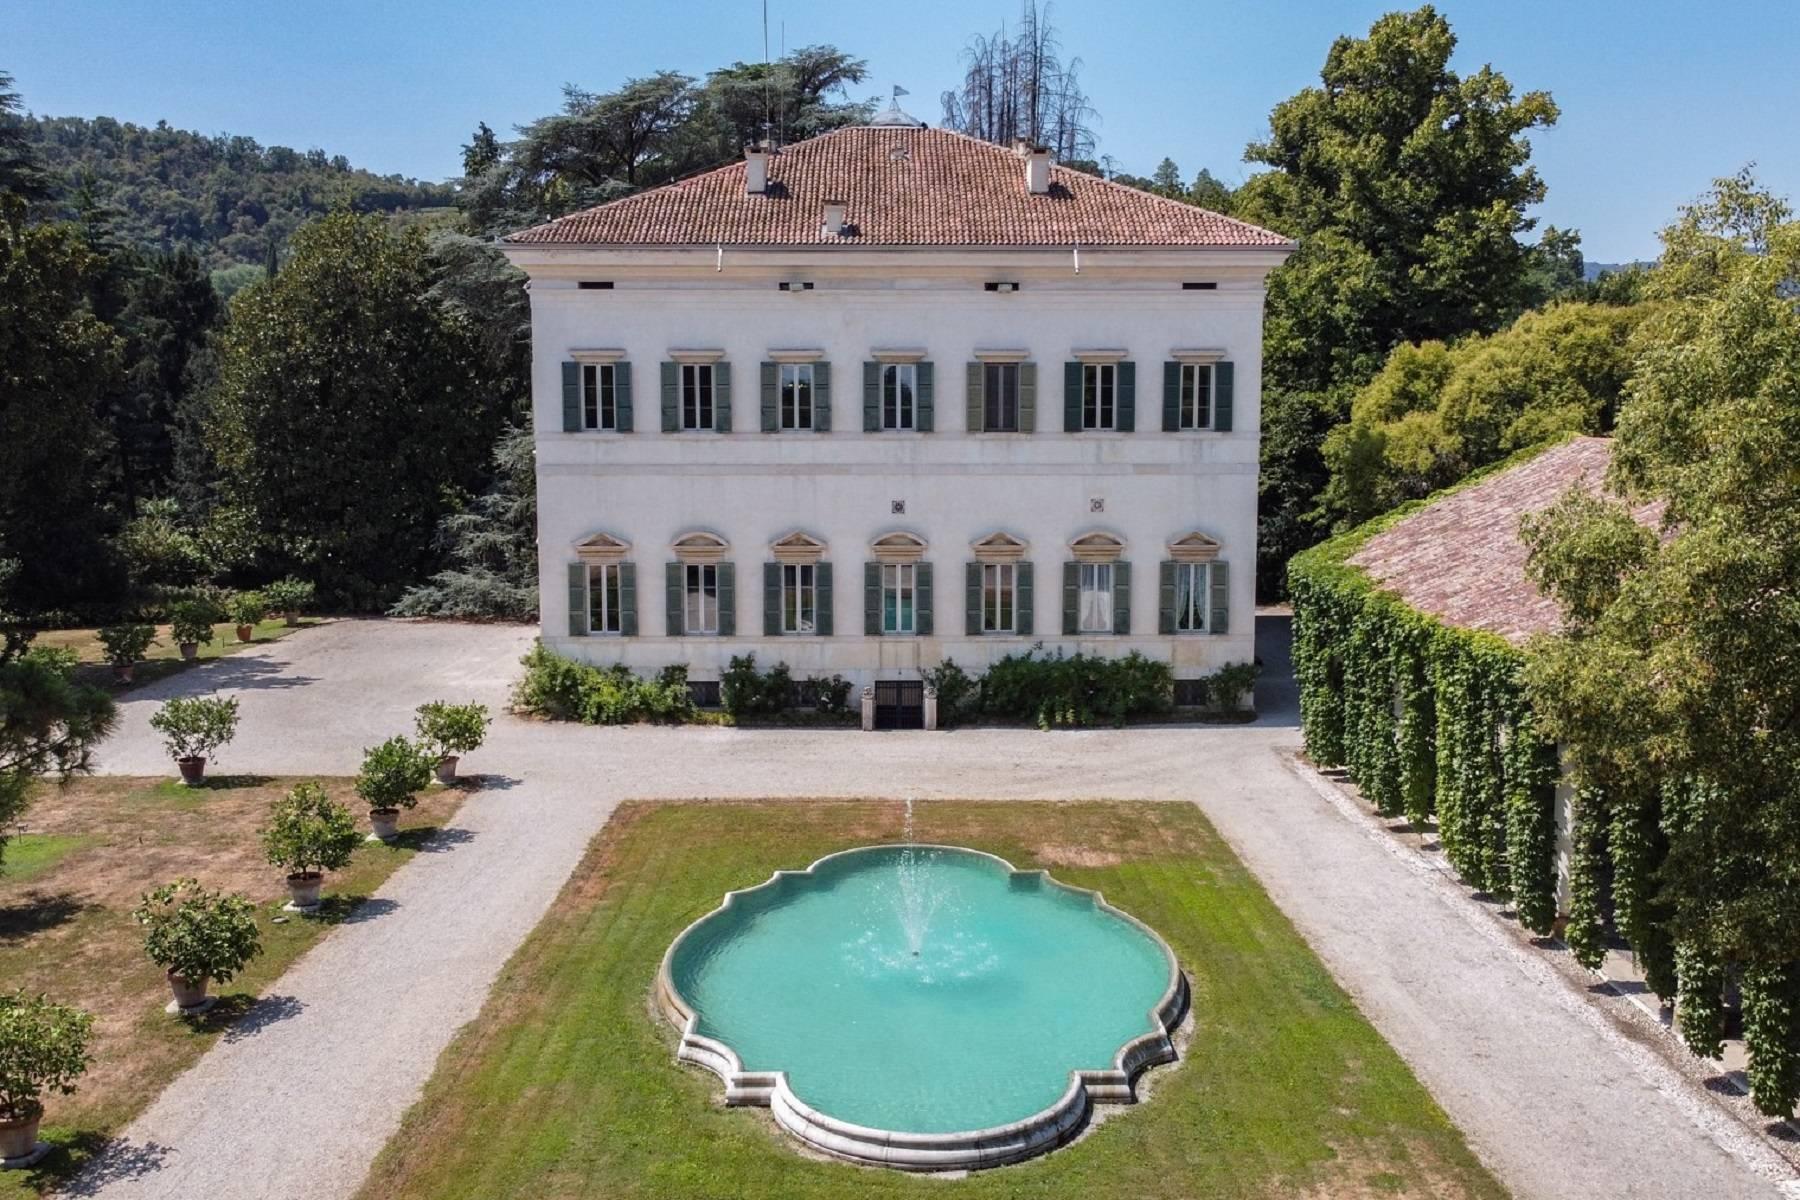 Elegante Villa Veneta con parco romantico e adiacenze - 34